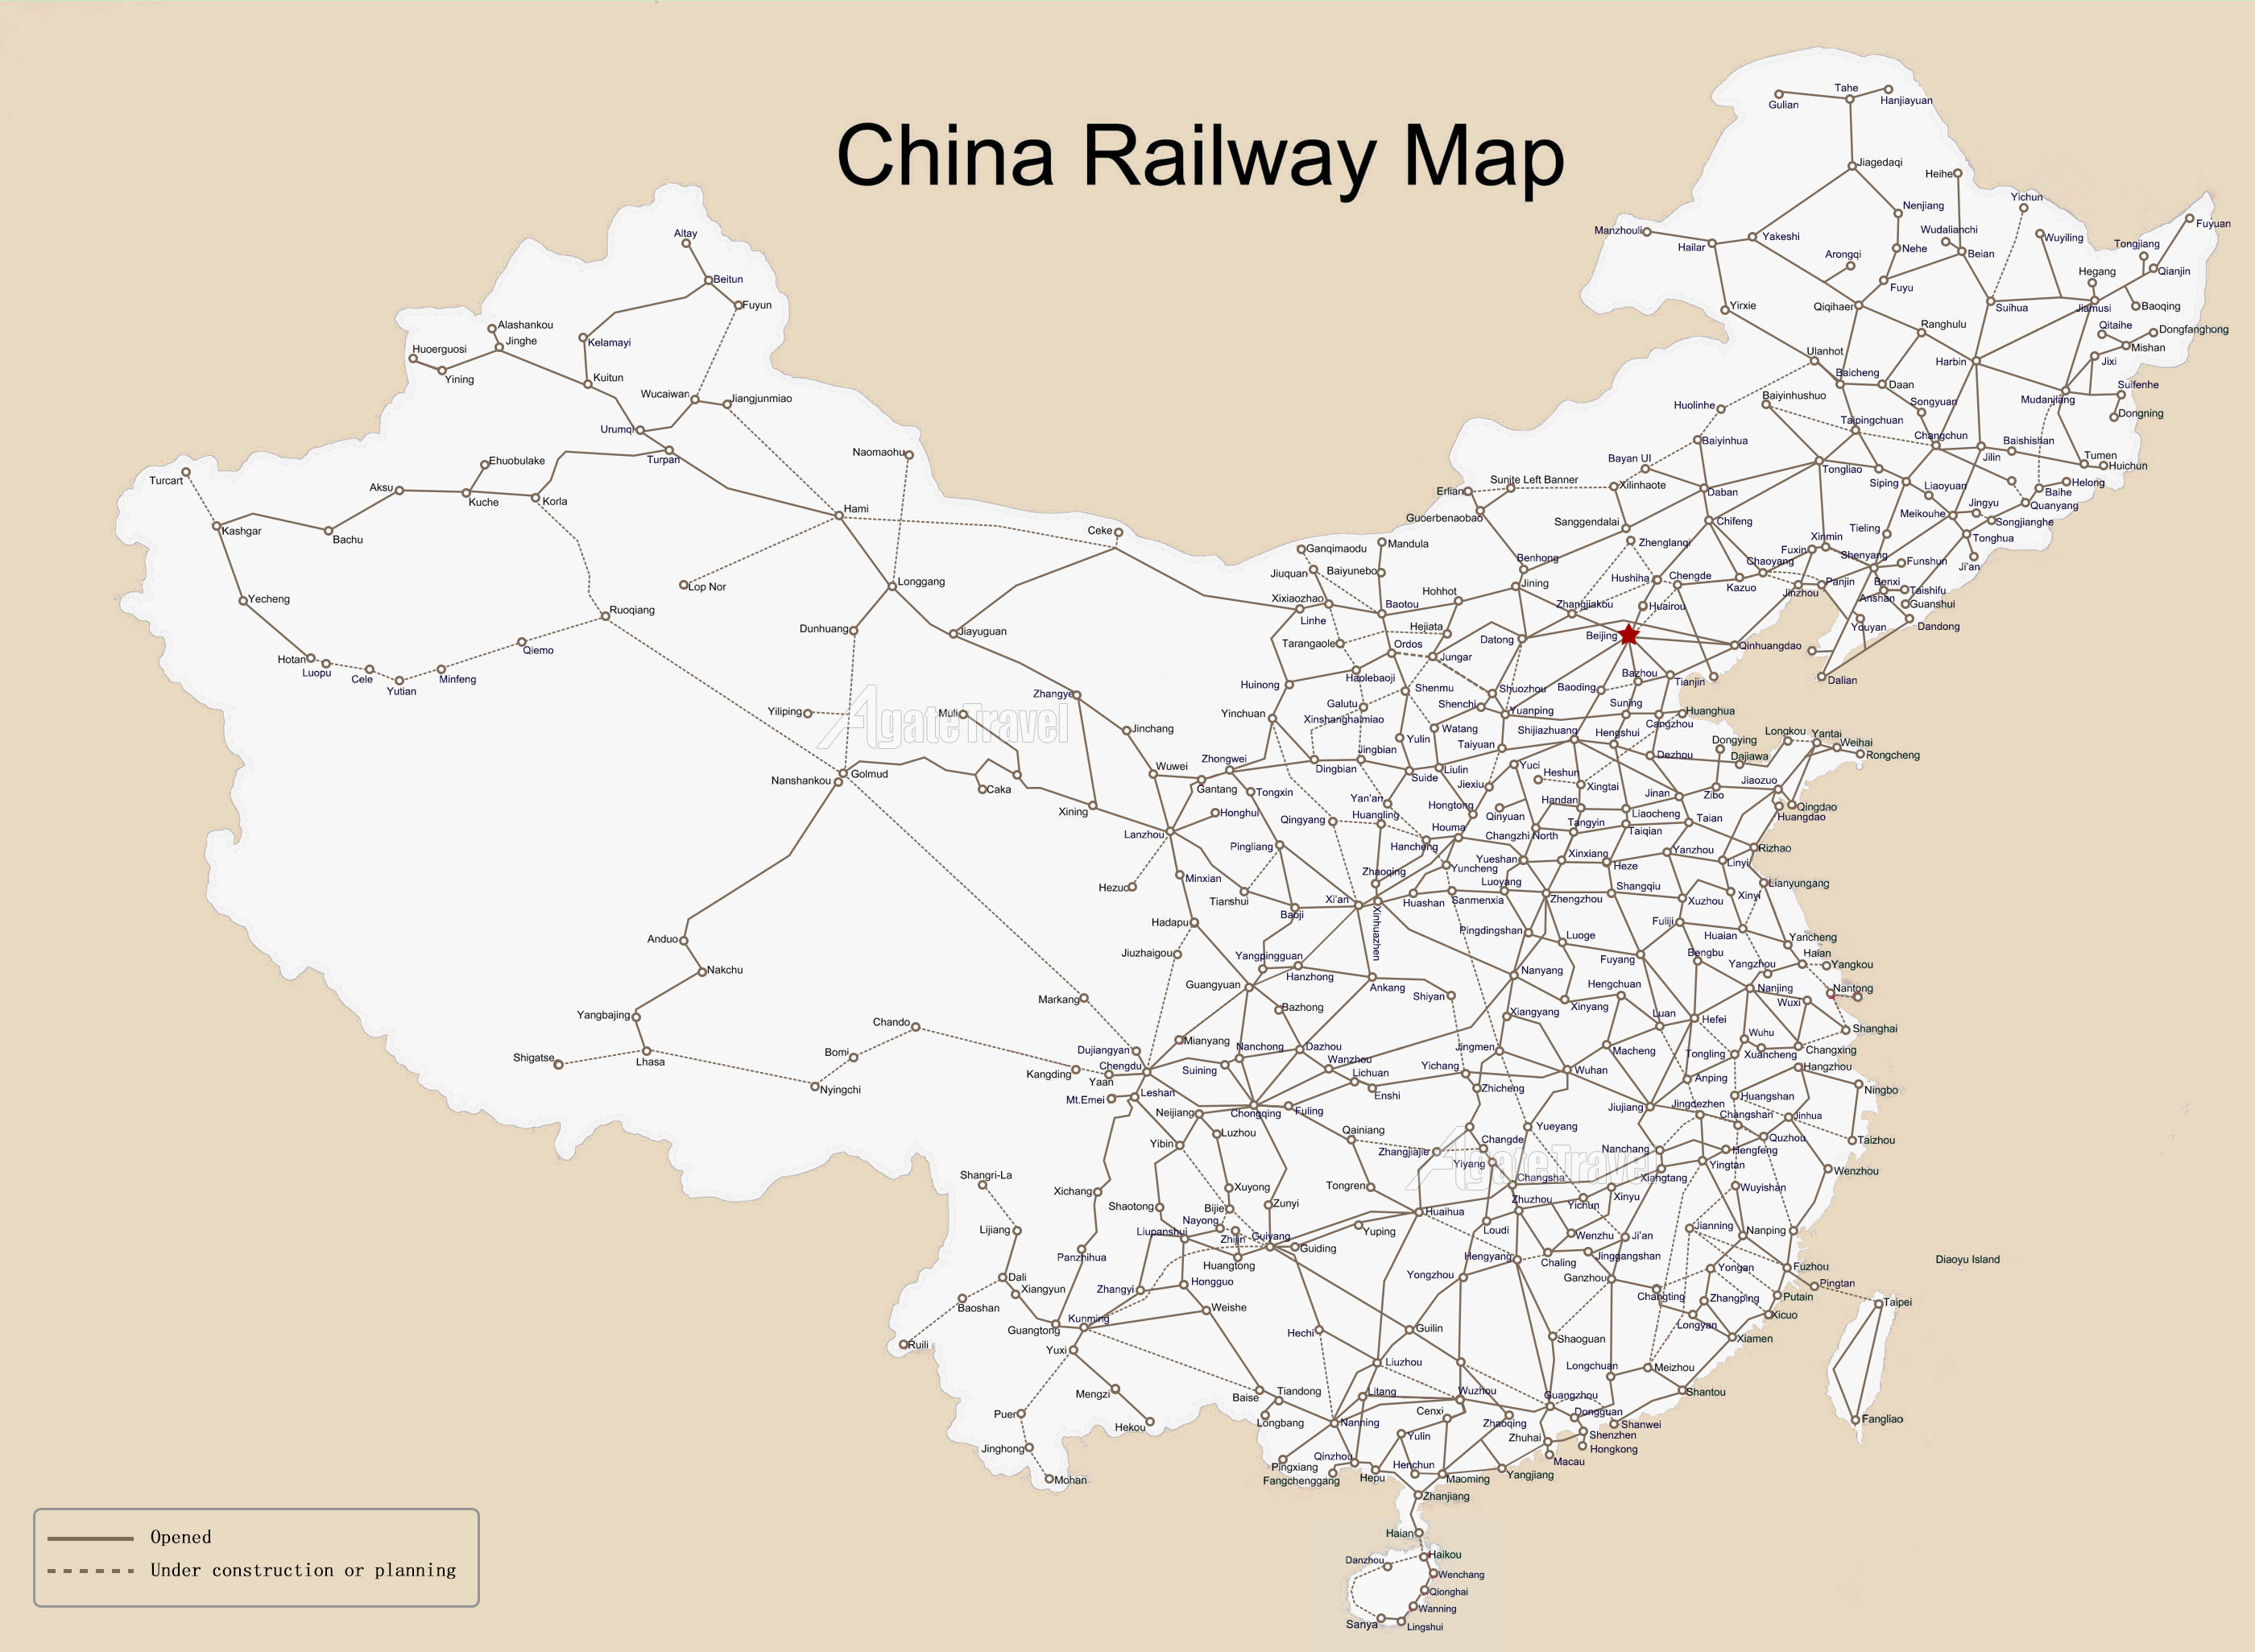 Indian Railway Map 2019 Pdf China High Speed Rail Map, 2019 China Railway Map, Pdf Download